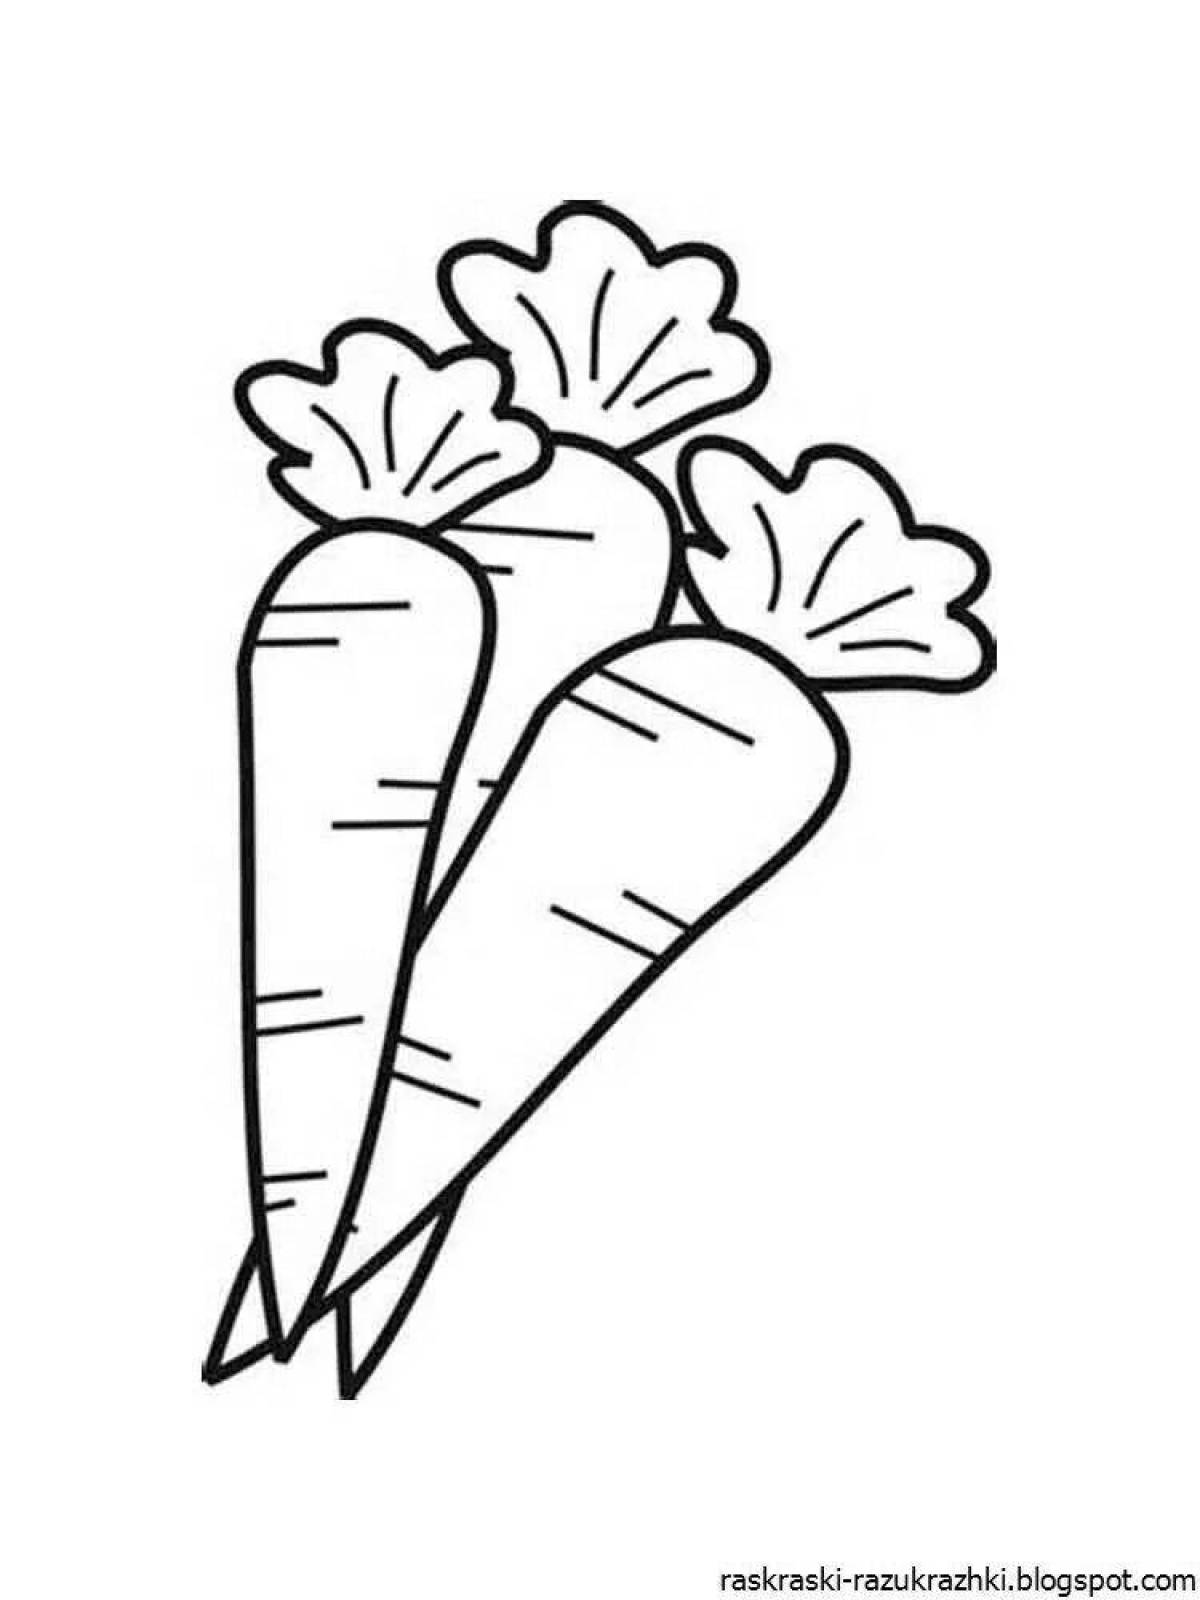 Красочная морковная раскраска для детей 2-3 лет